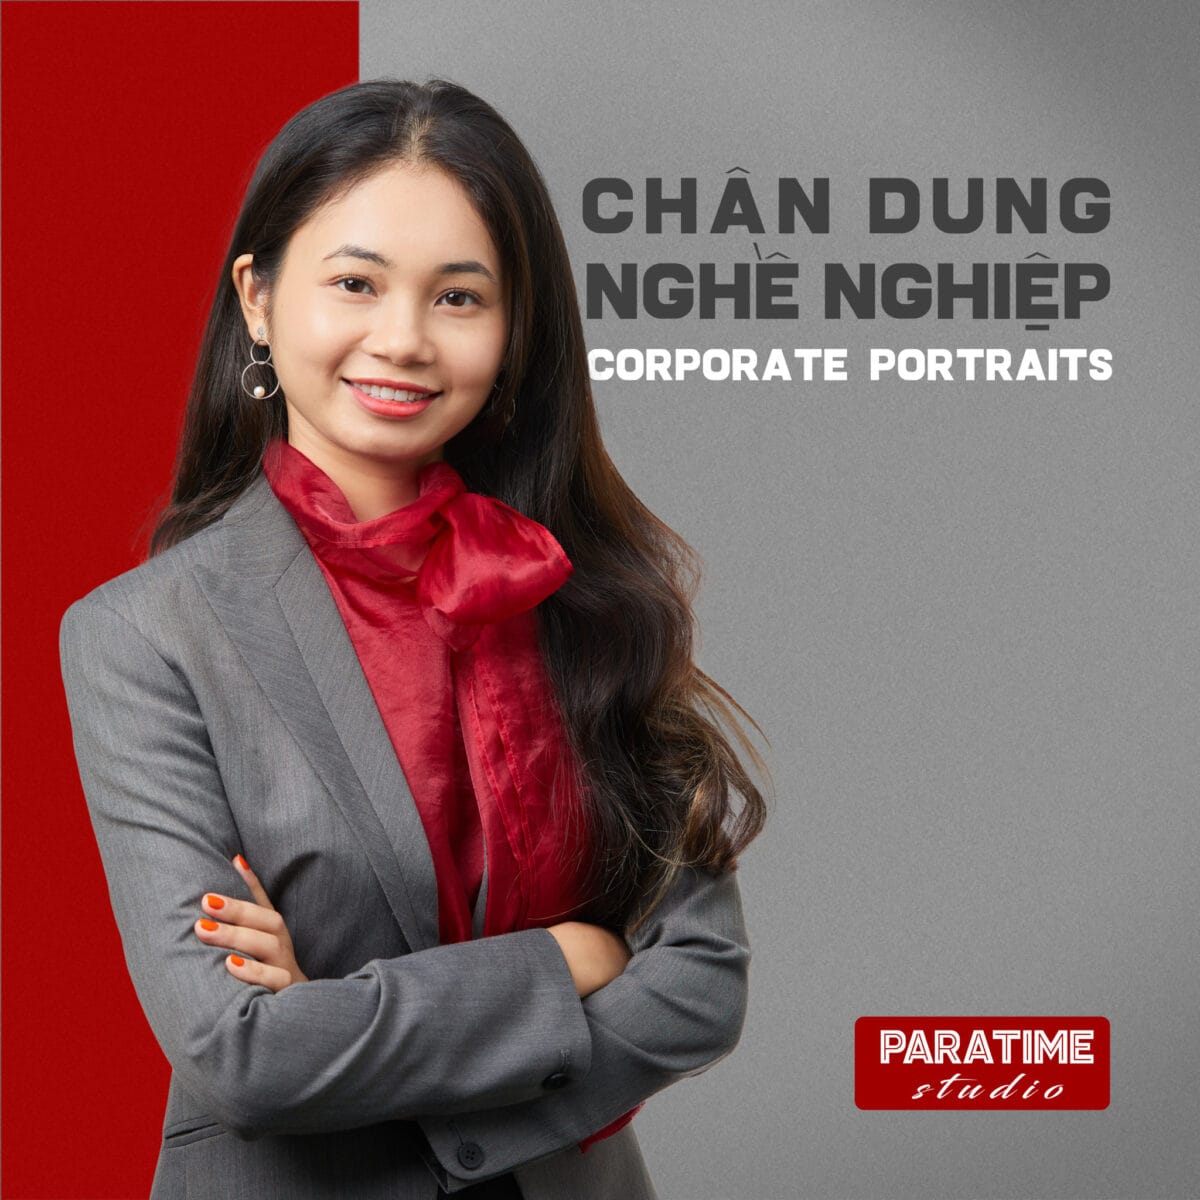 Paratime Studio Corporate Portraits